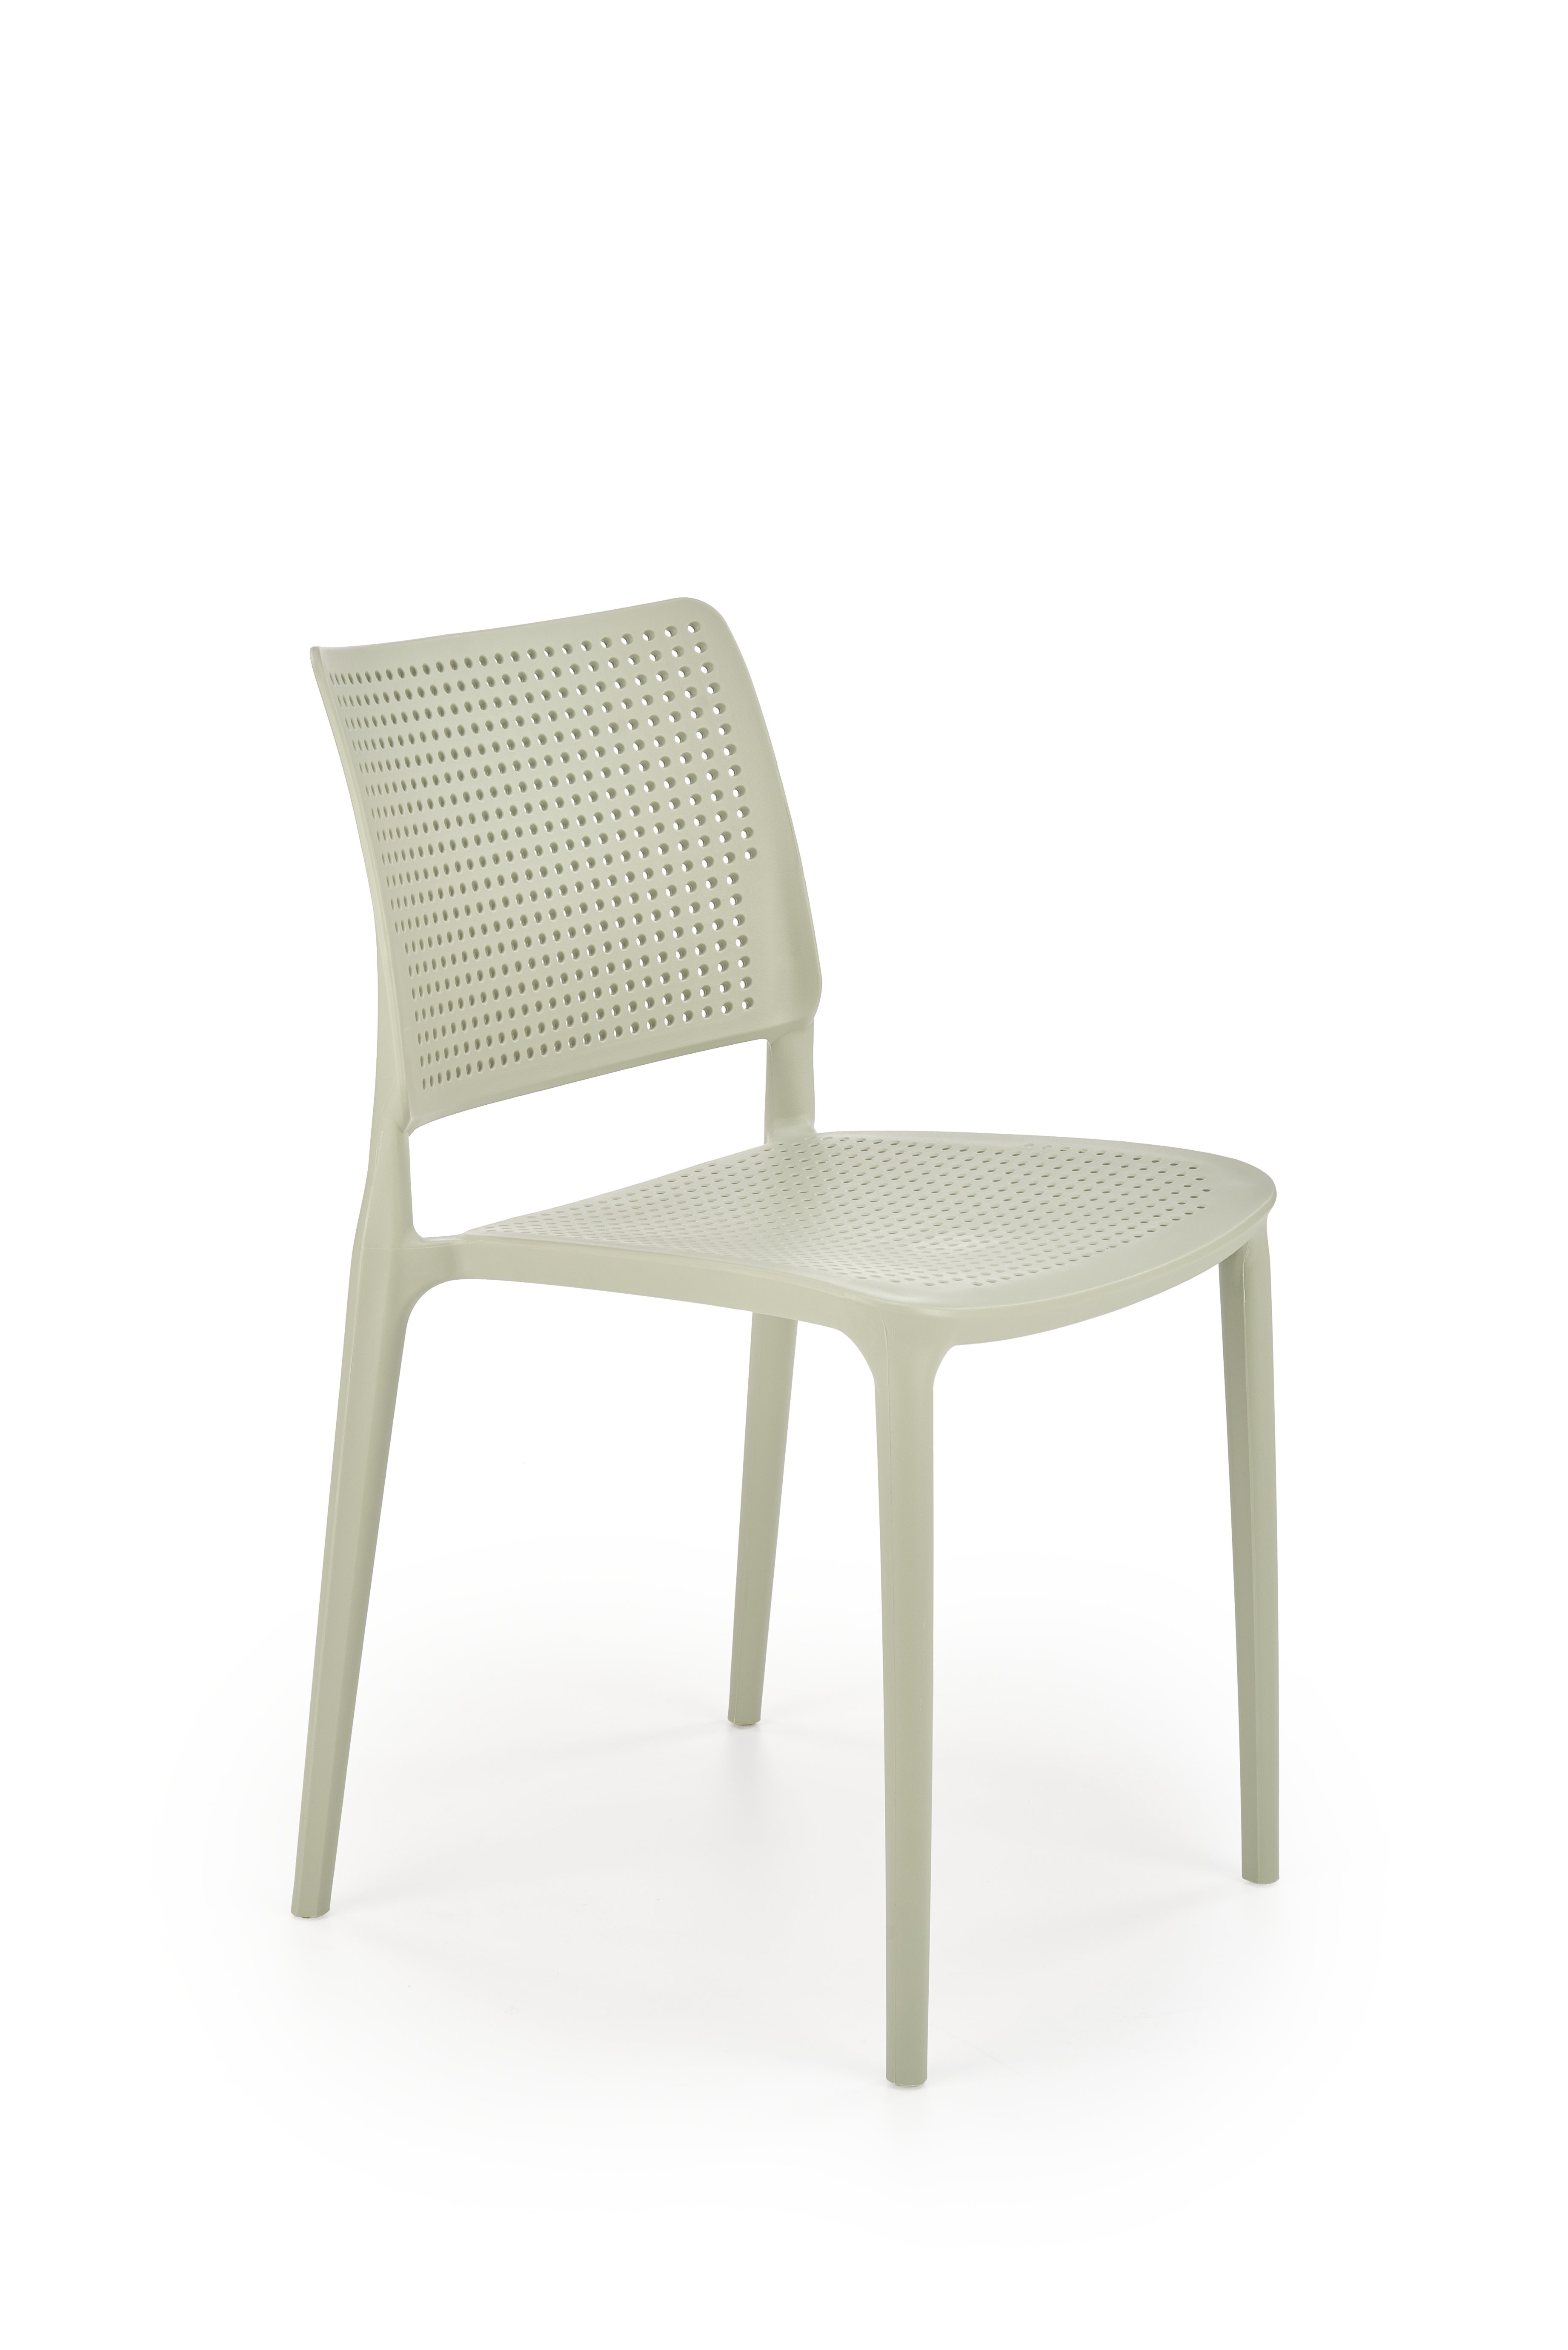 K514 Židle Mintás (1p=4szt) k514 Židle mietowy (1p=4szt)